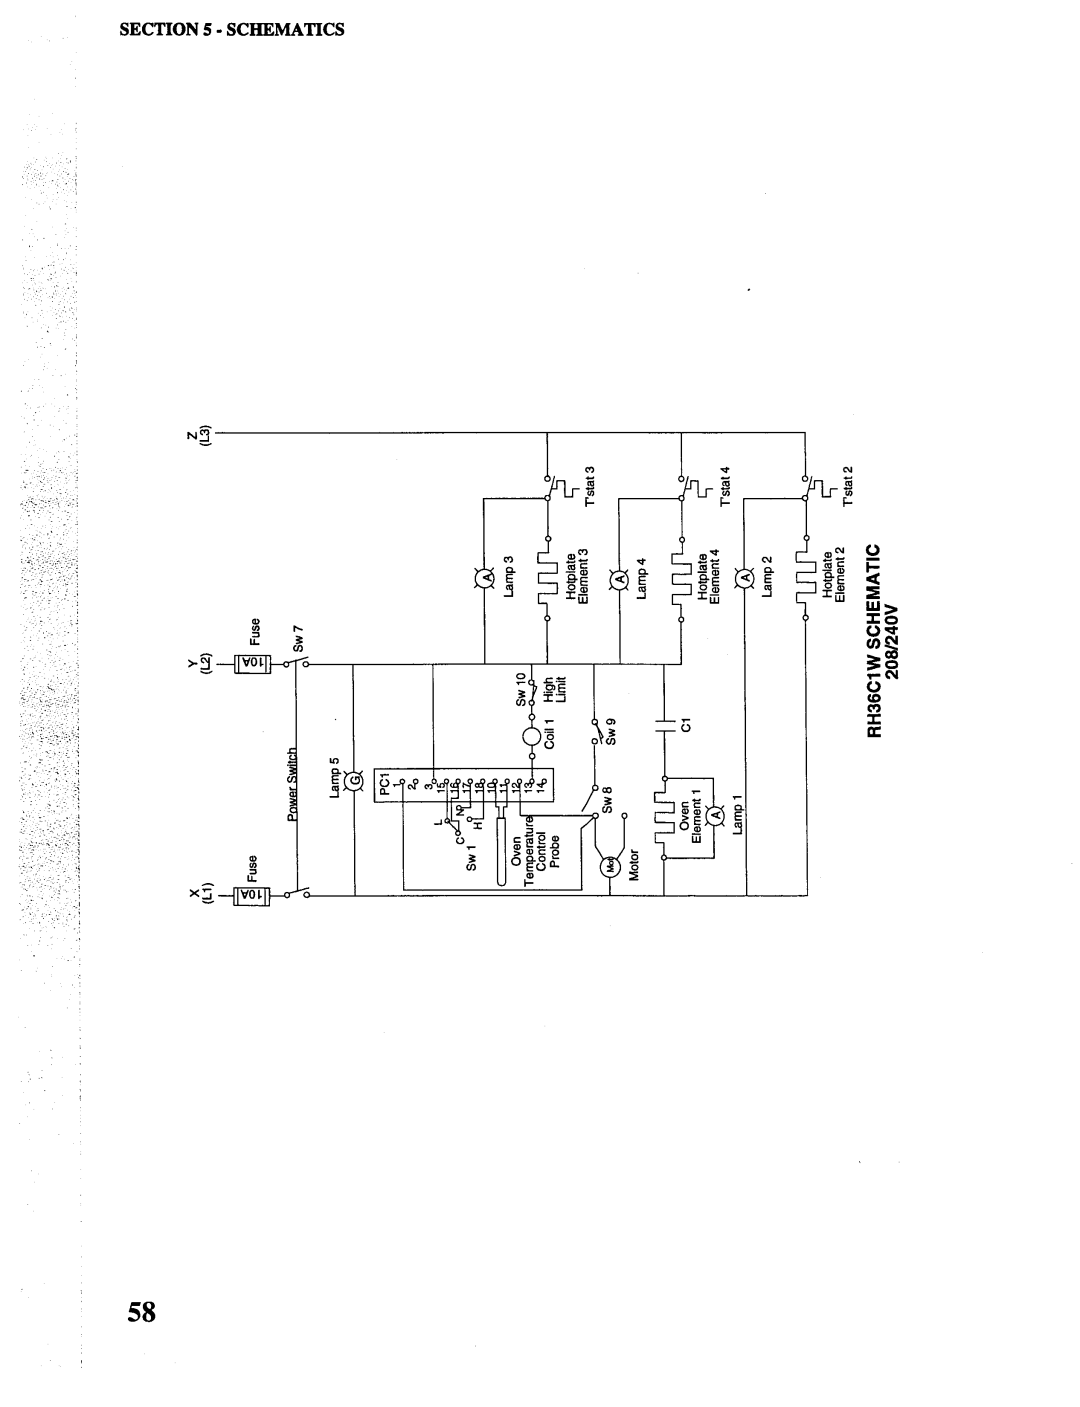 Toastmaster CO36, MH36, RH36 manual 